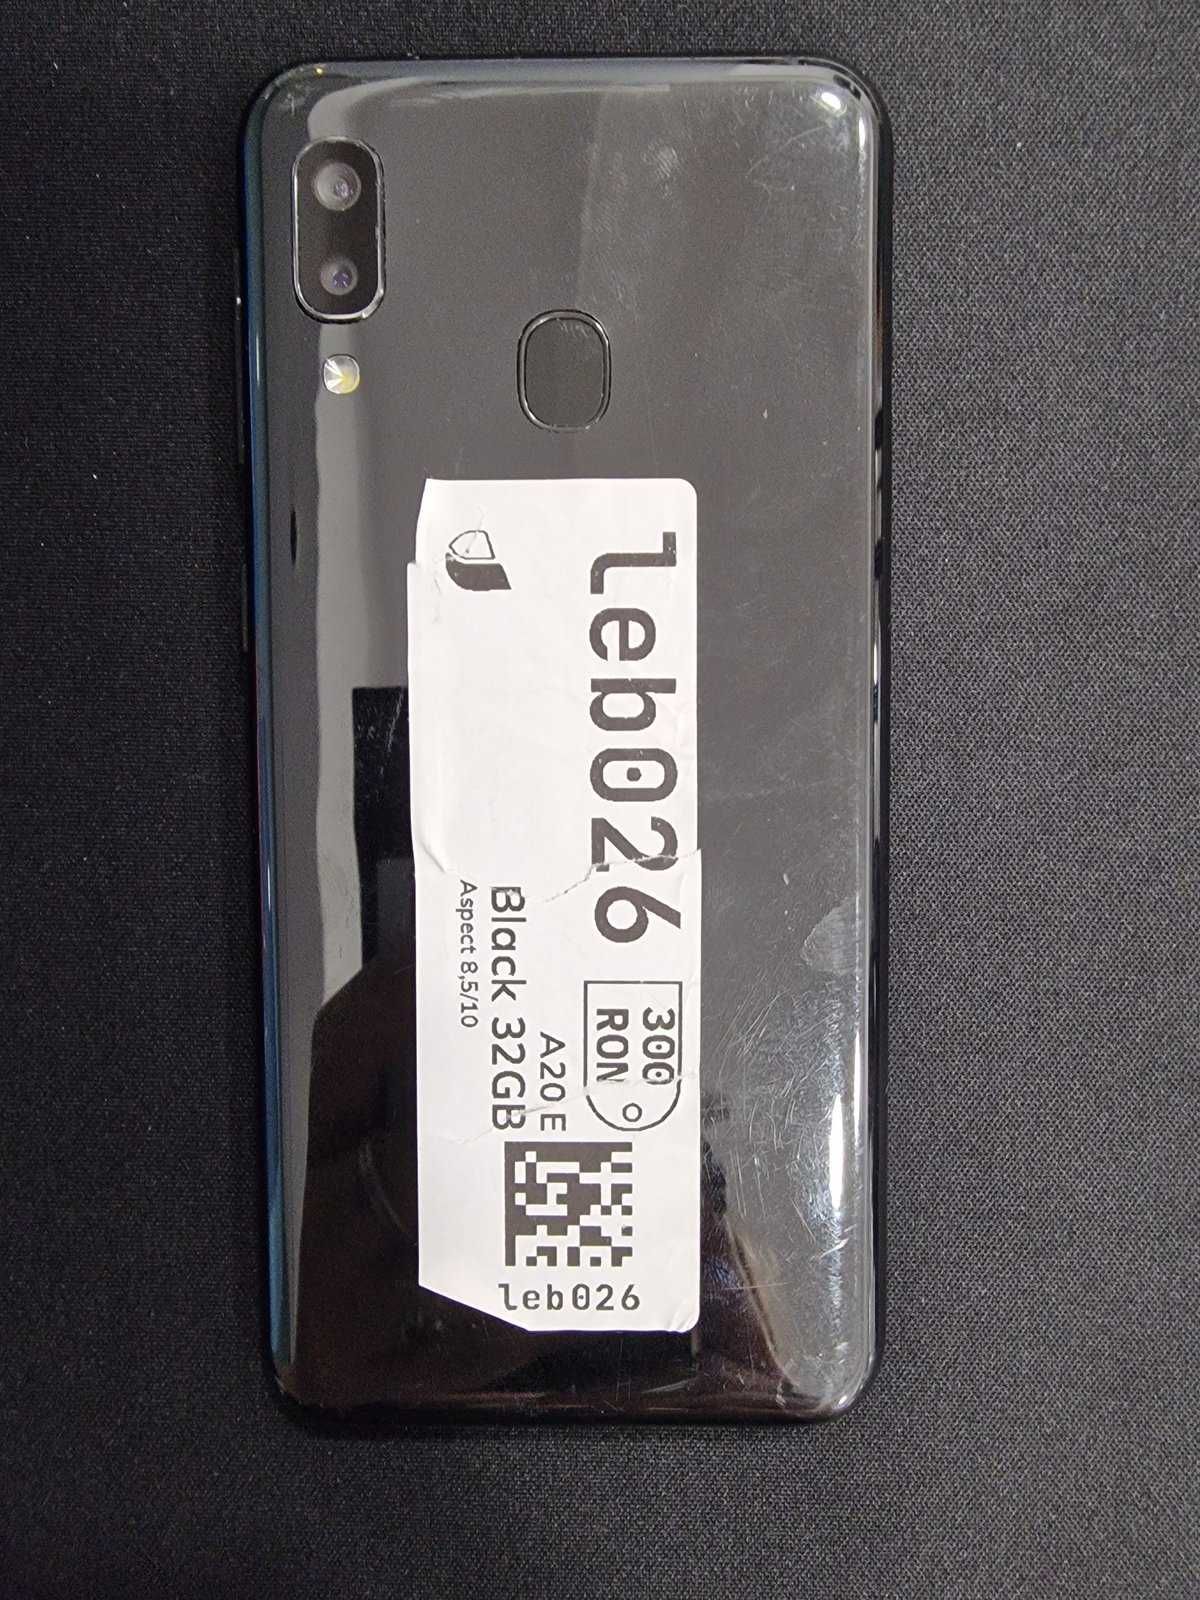 Samsung A20 E 32GB Black ID-leb026